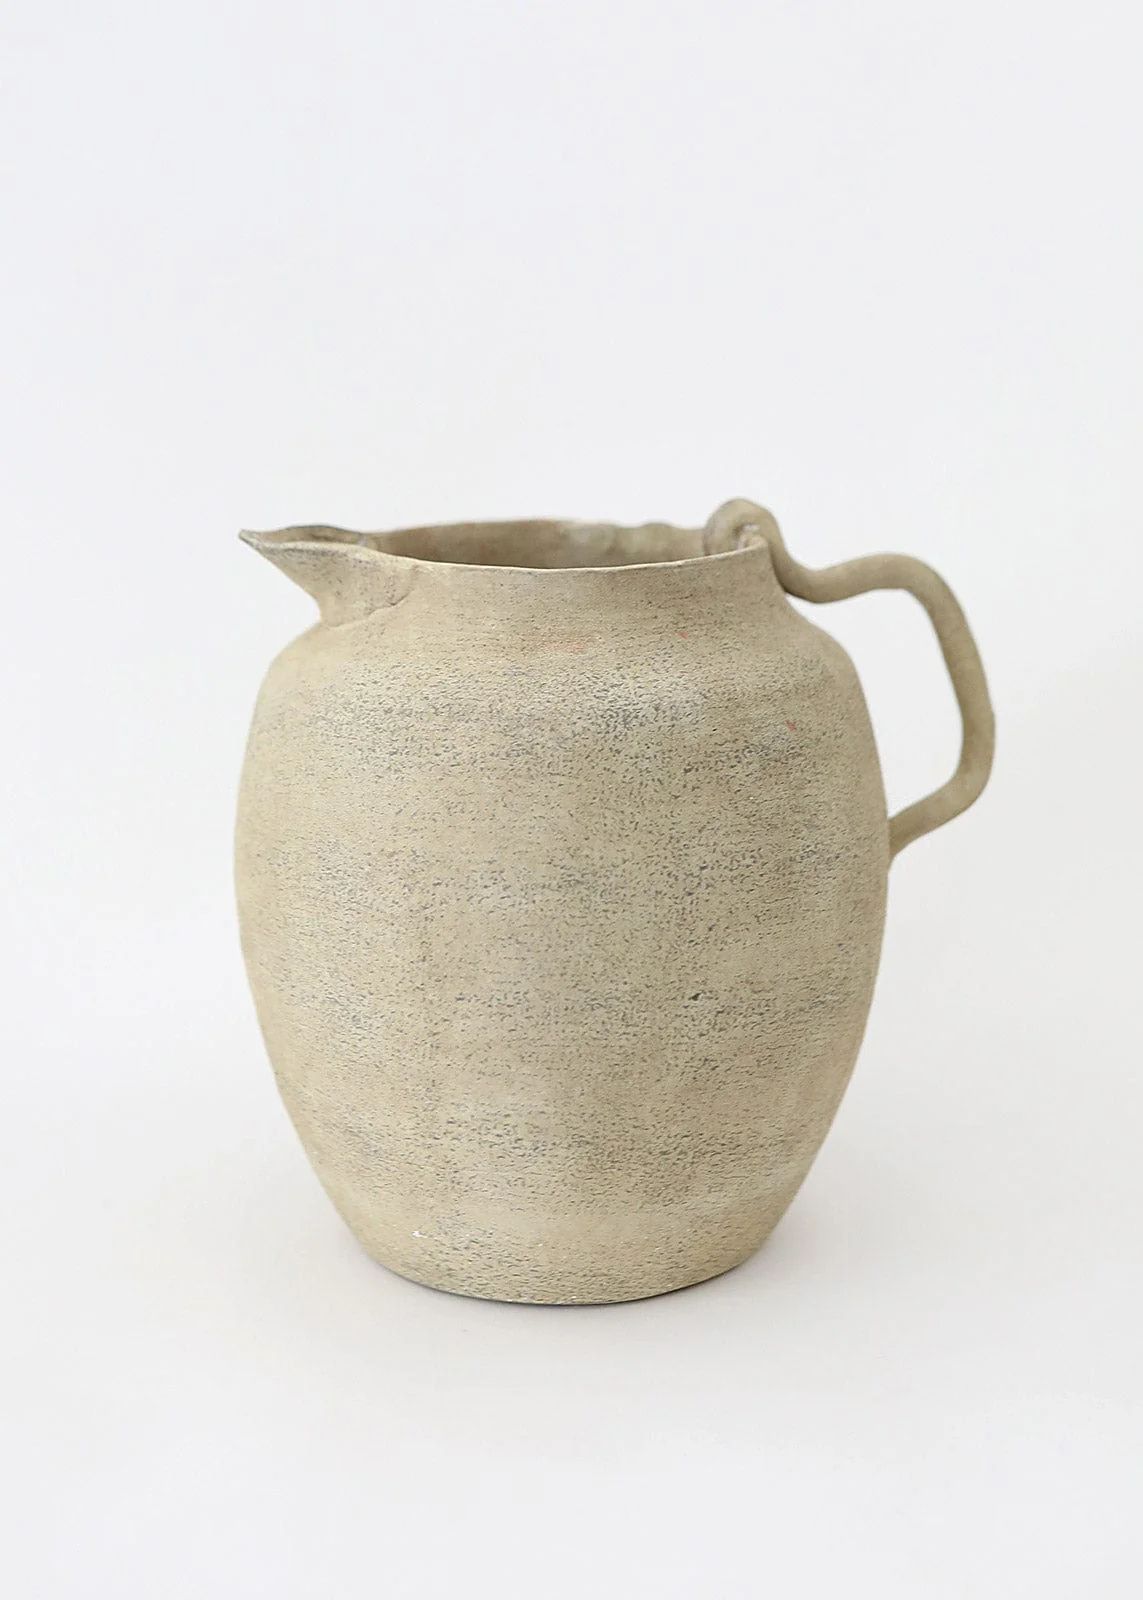 Distressed Ceramic Pitcher Vase | Farmhouse Home Decor | Afloral.com | Afloral